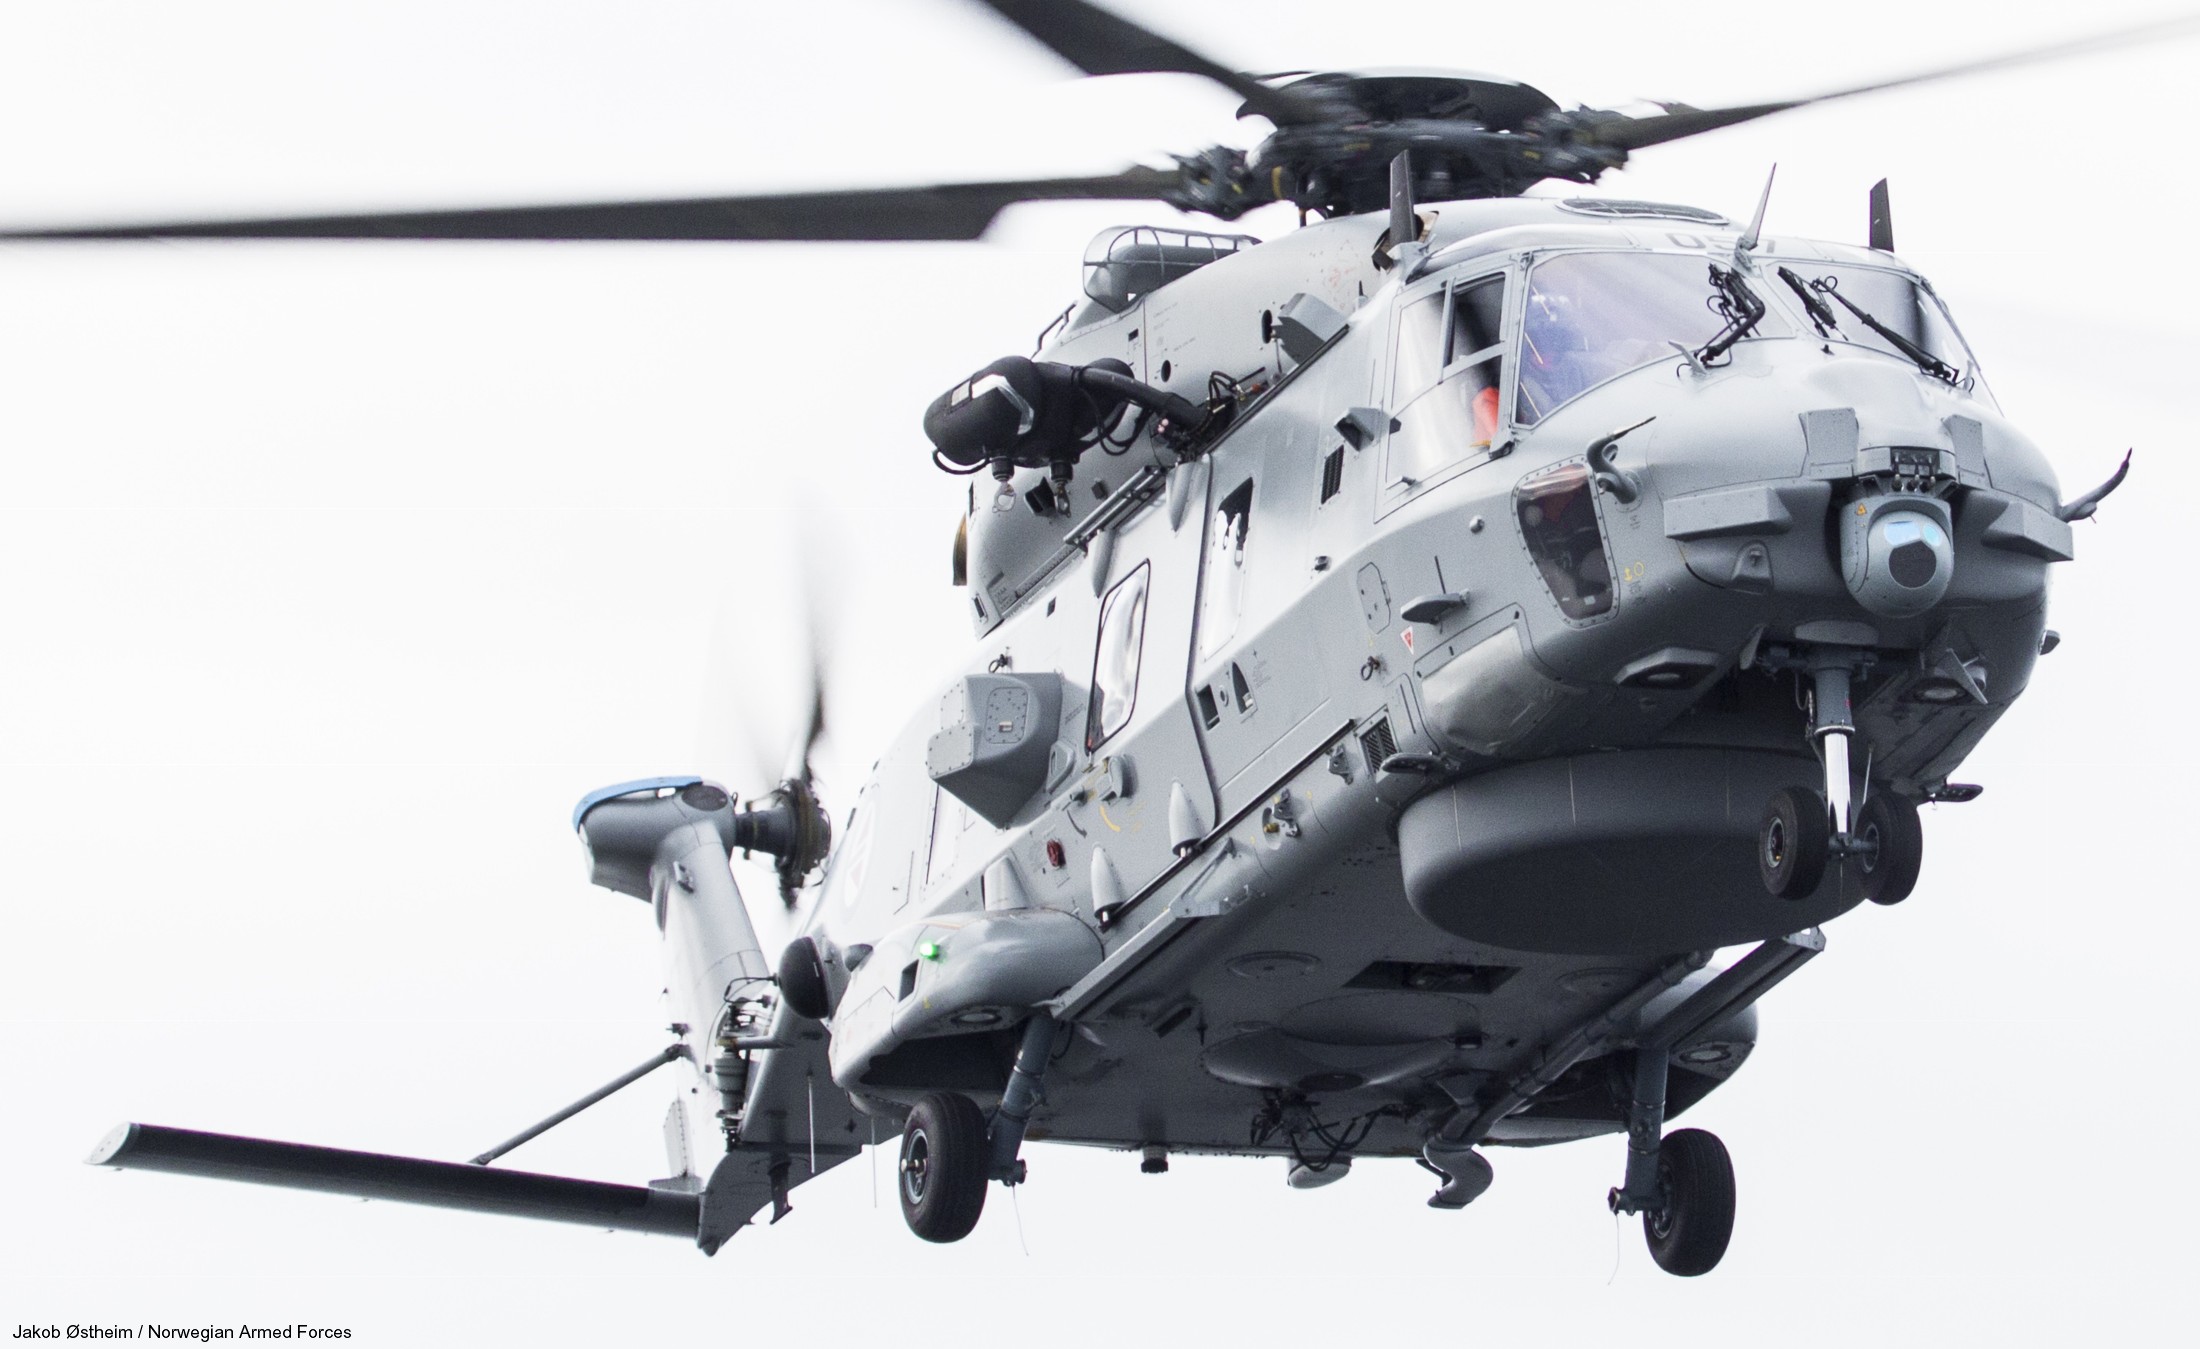 nh90 nfh asw helicopter royal norwegian coast guard navy air force kystvakt sjoforsvaret 057 02